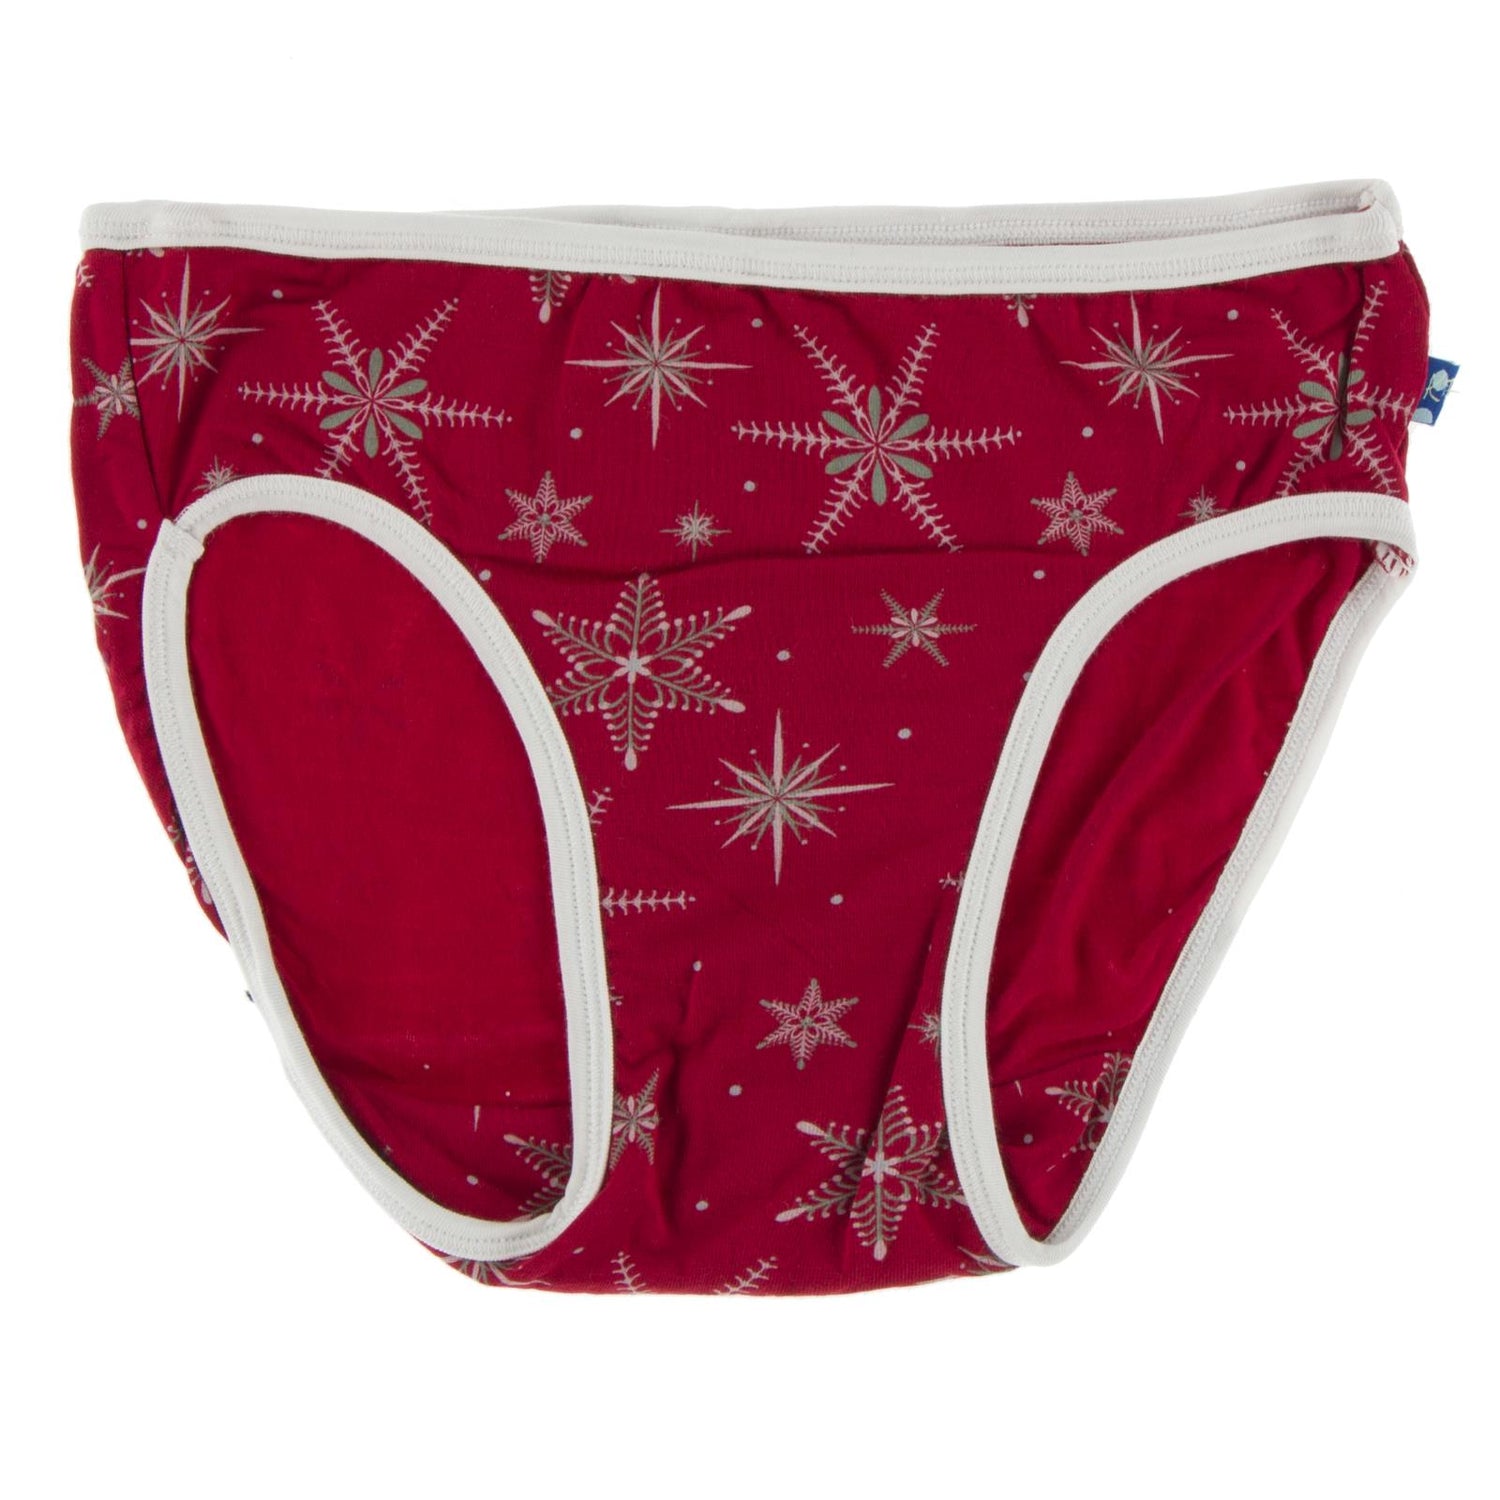 Print Underwear in Crimson Snowflakes with Natural Trim